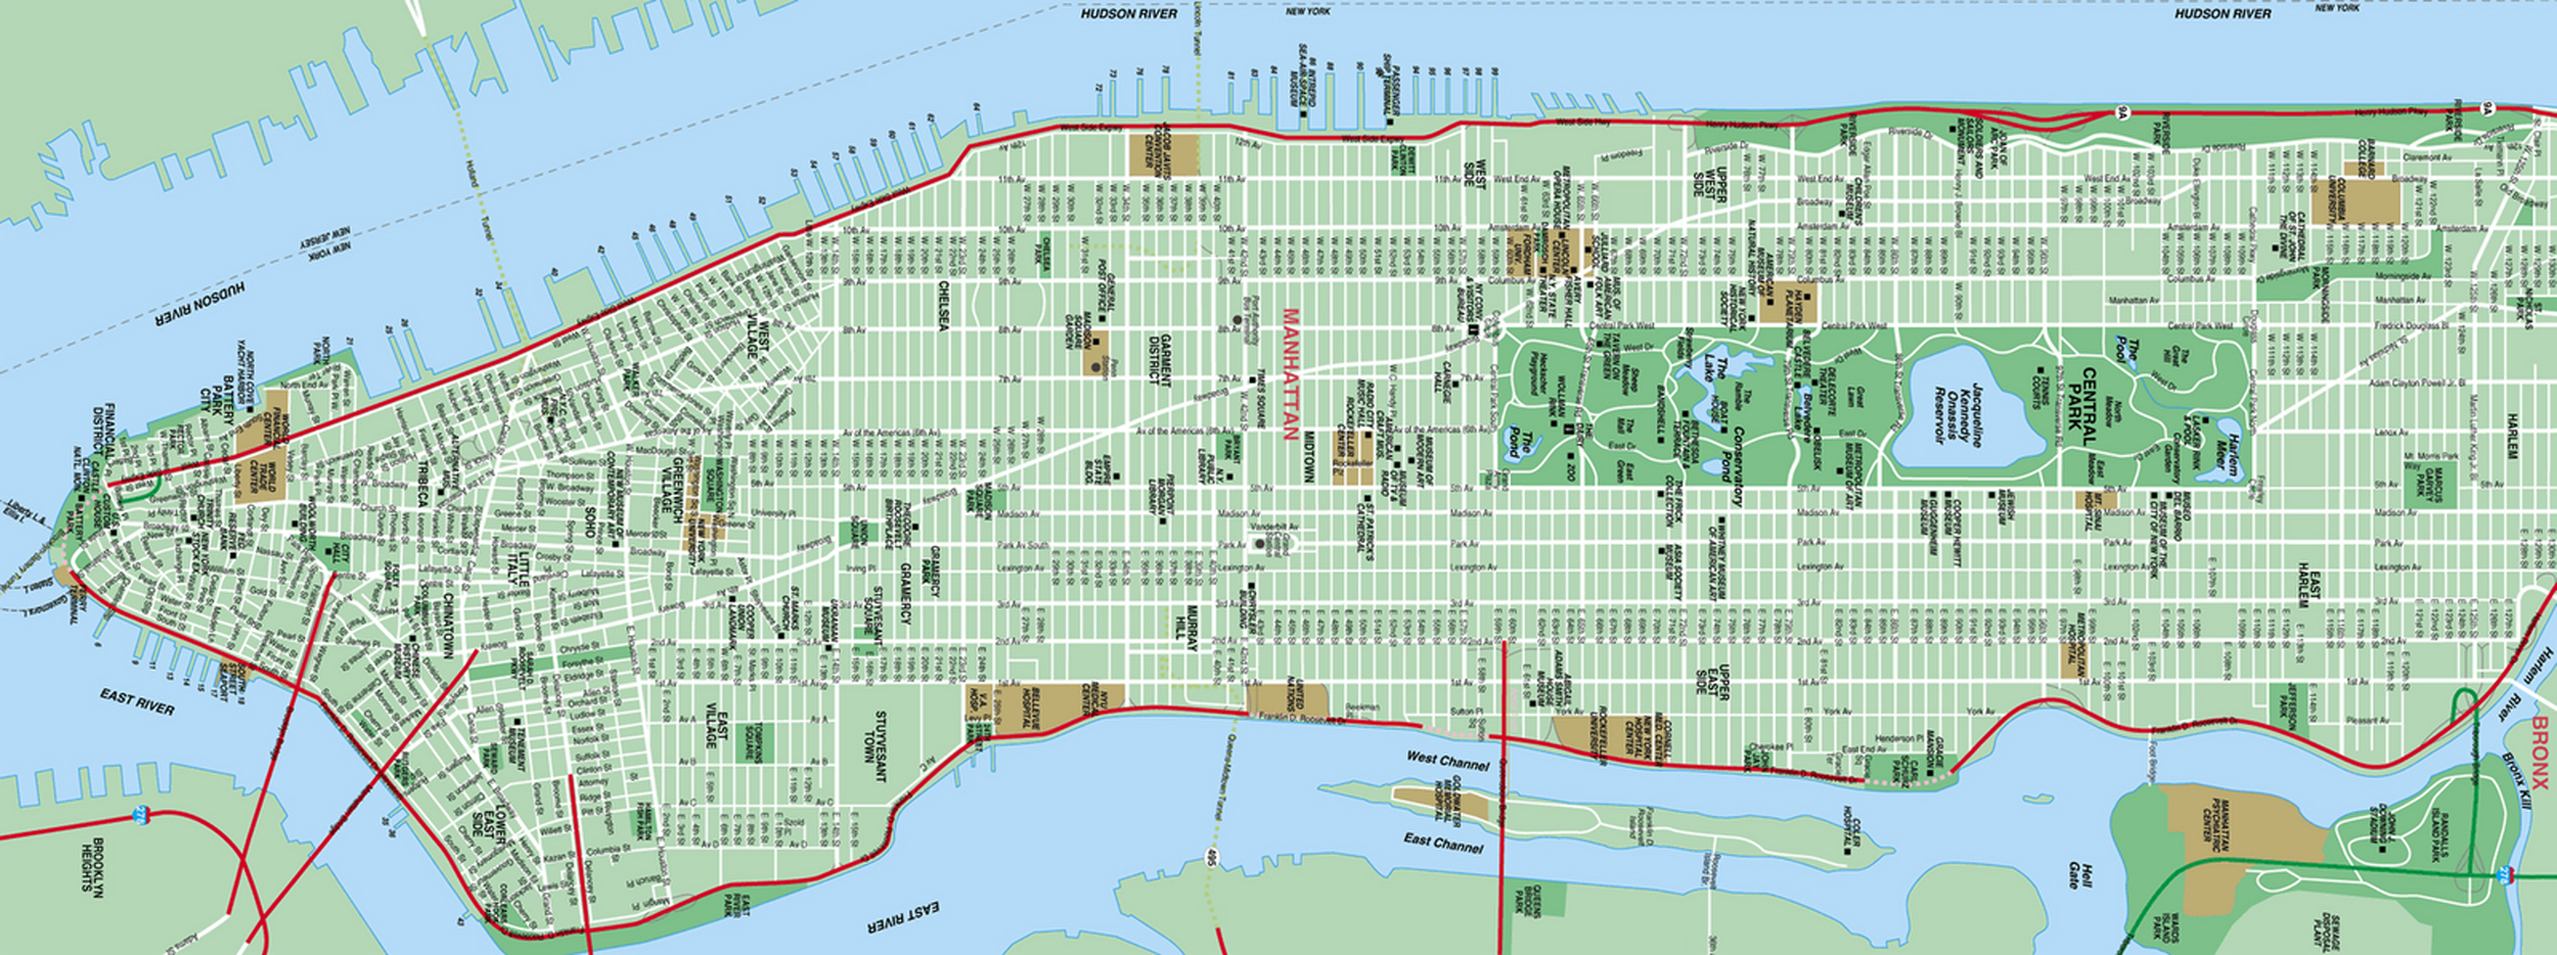 Watch Manhattan’s Boundaries Expand Over 250 Years